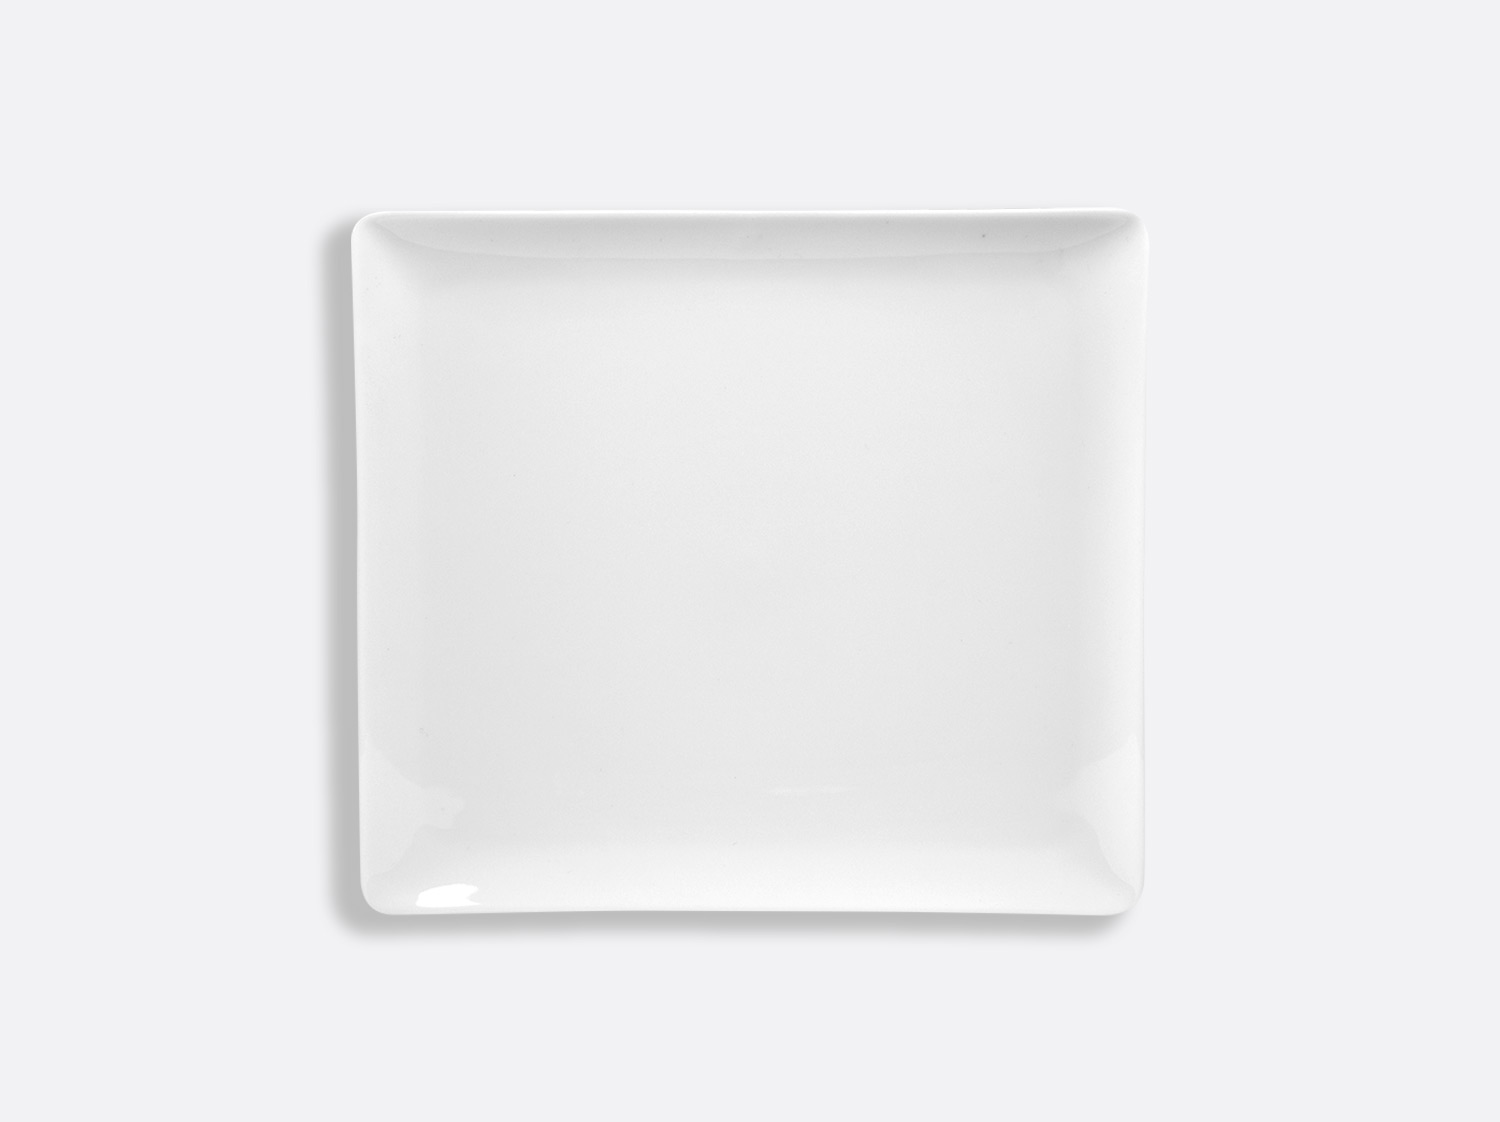 China Rectangular tray 8.7'' x 7.7'' of the collection Fantaisies blanches | Bernardaud